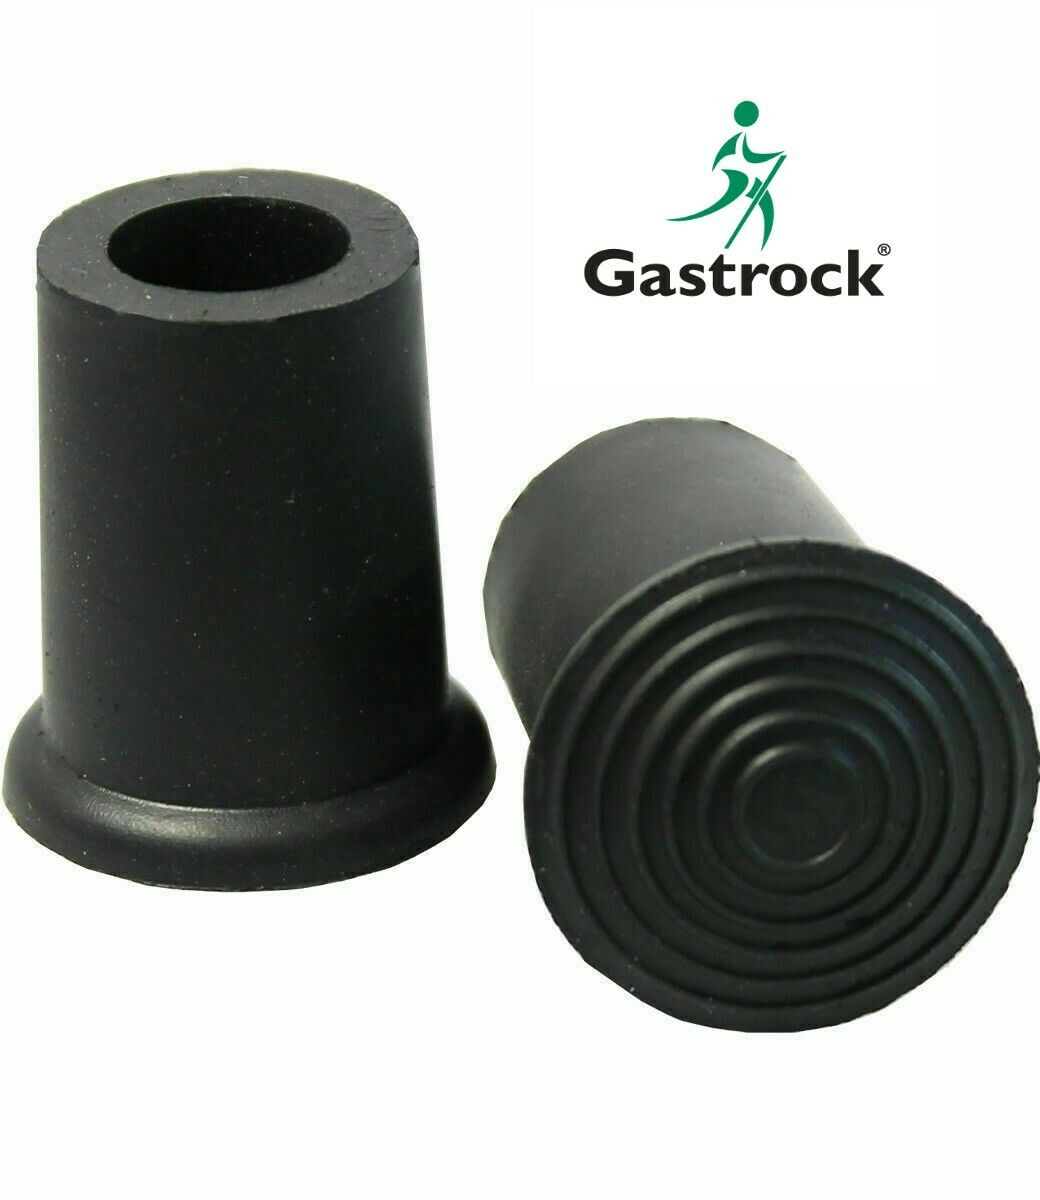 Gummipuffer Schwarz Für Gehstöcke 8-22mm, Gehstockgummi, Stockkapsel, Gummikappe